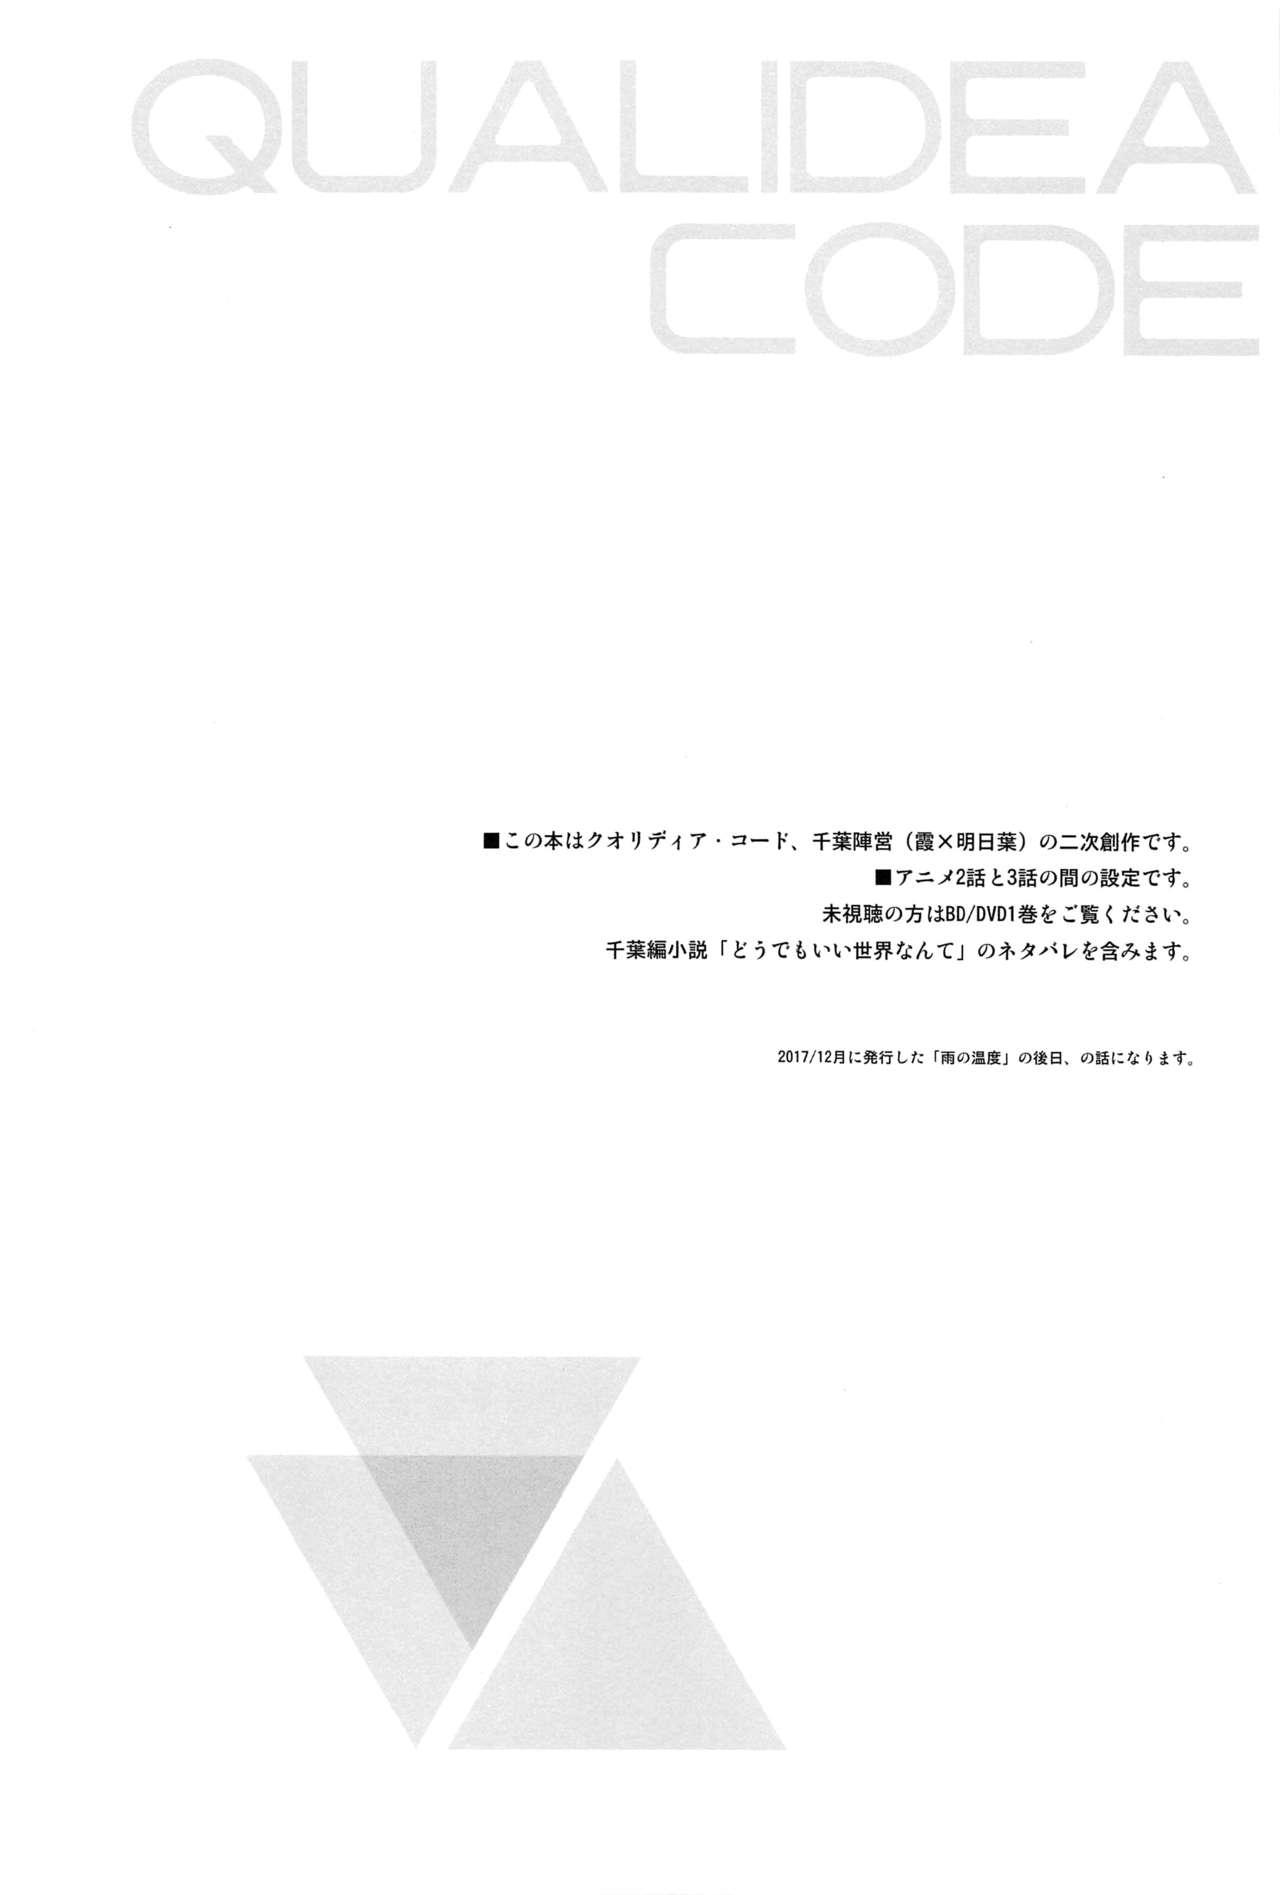 Ssbbw Kono Sekai no Owari made - Qualidea code Teenies - Page 4